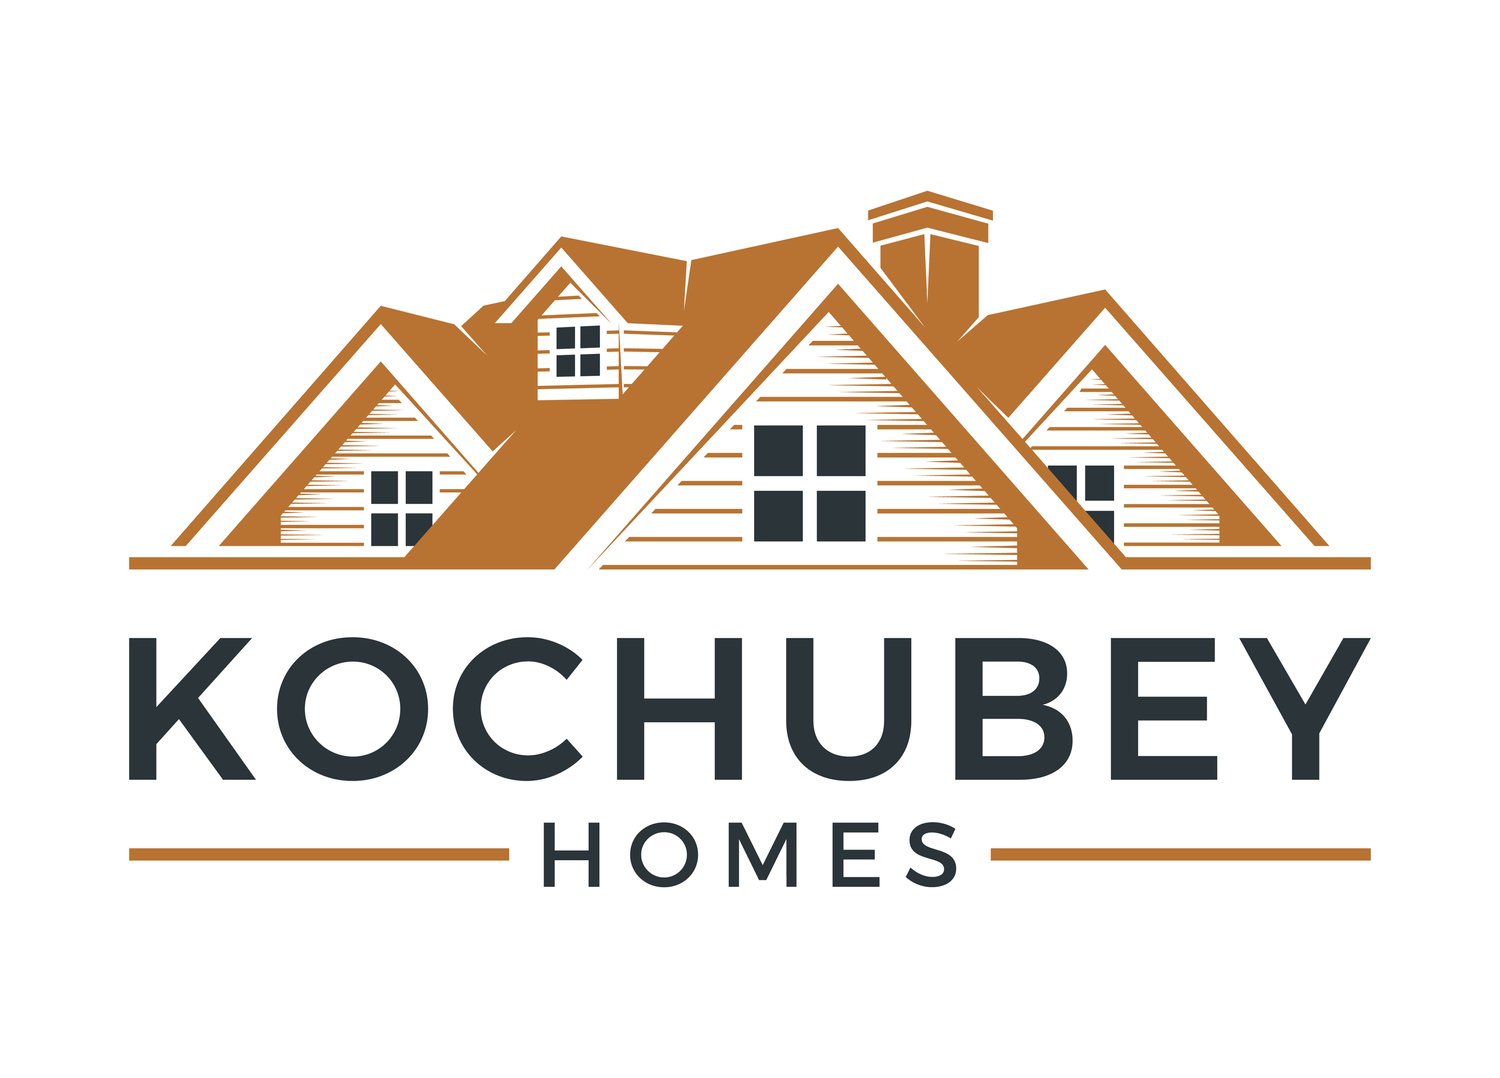 Kochubey Homes